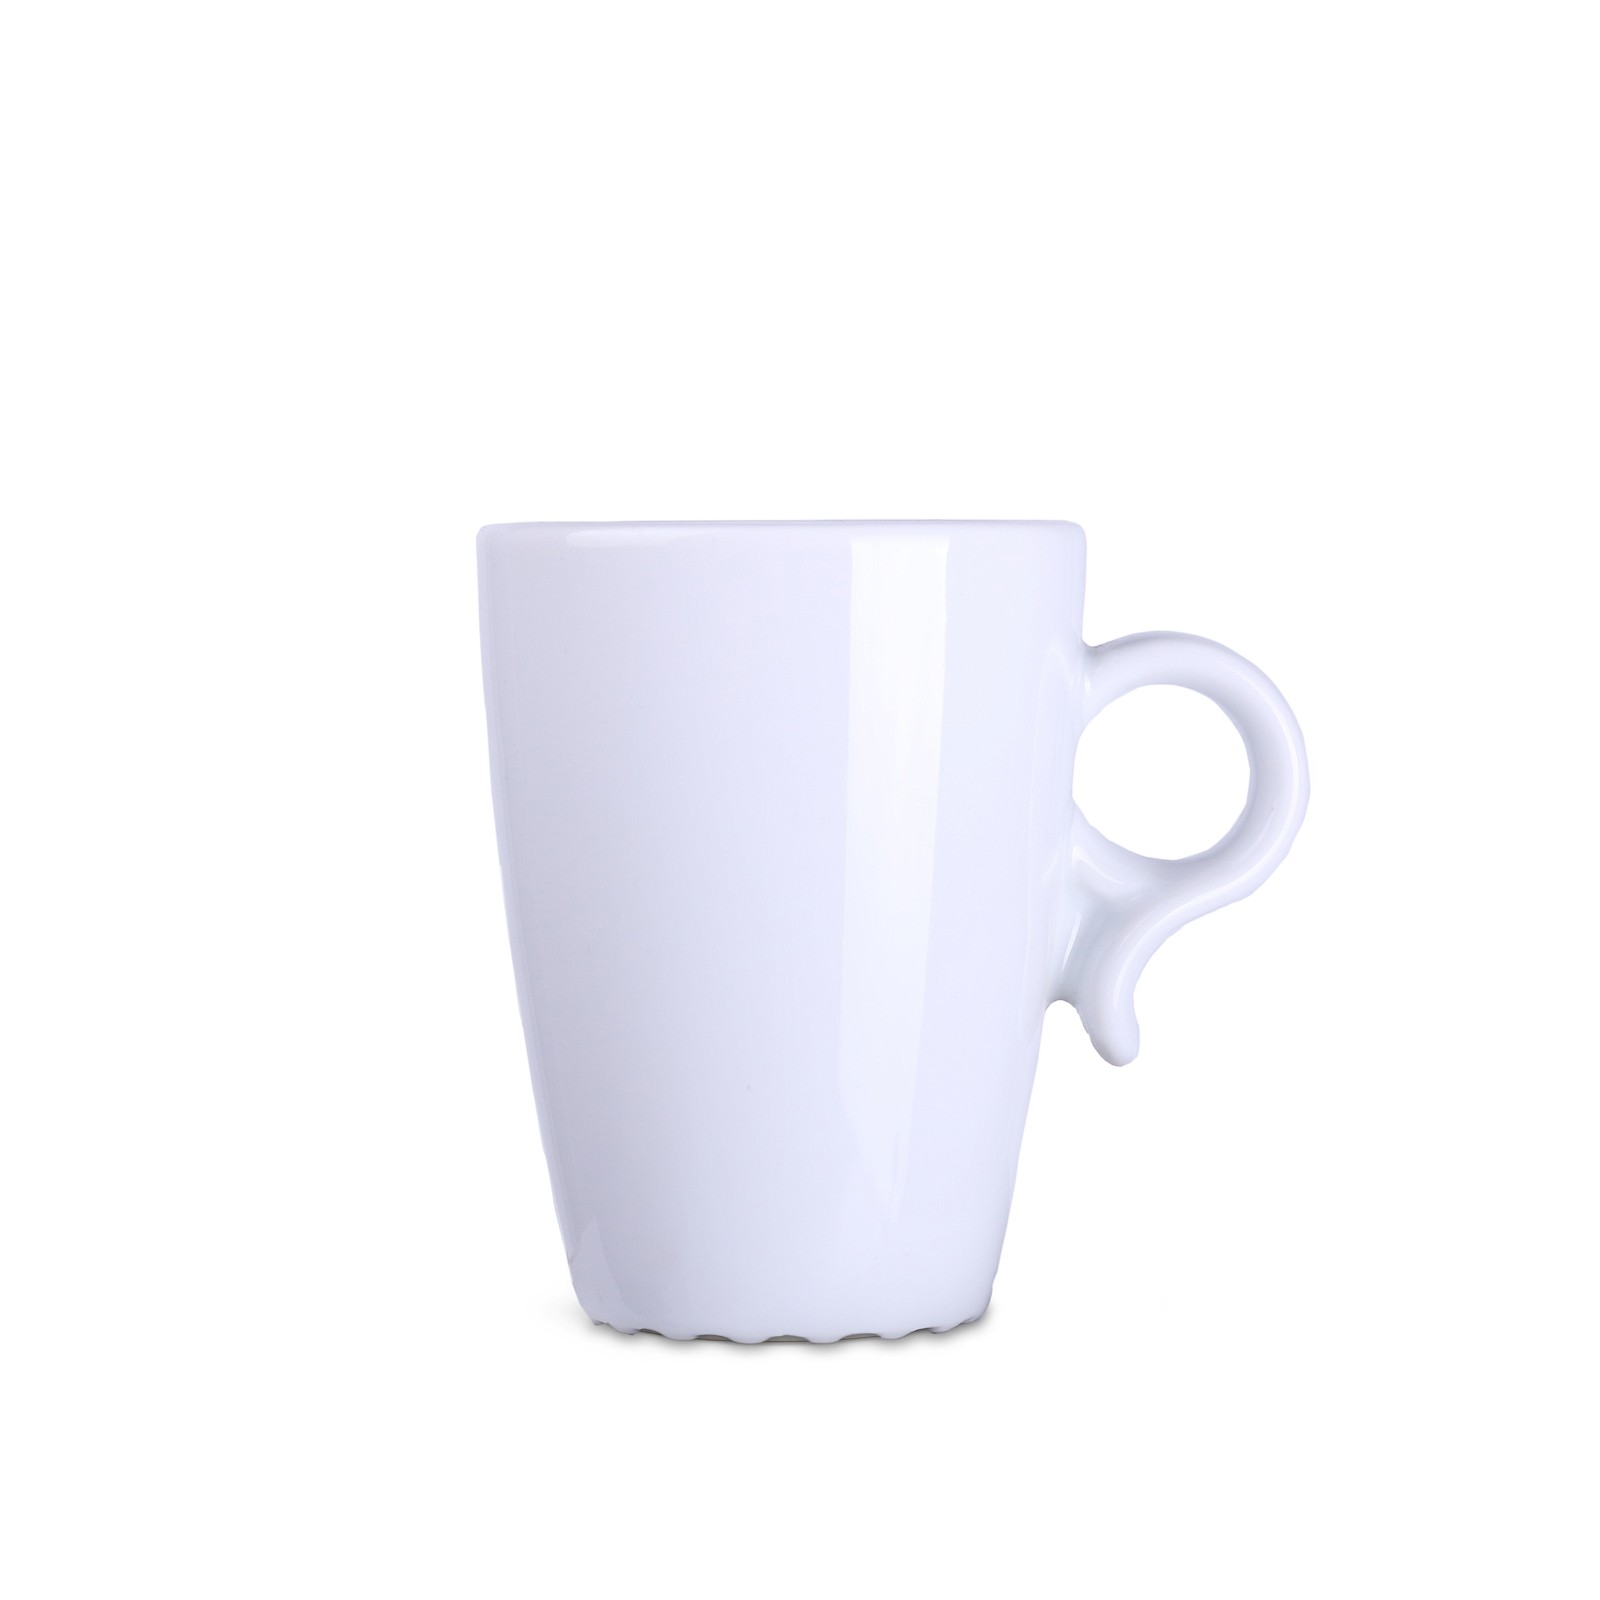 mug costa 200ml with logo